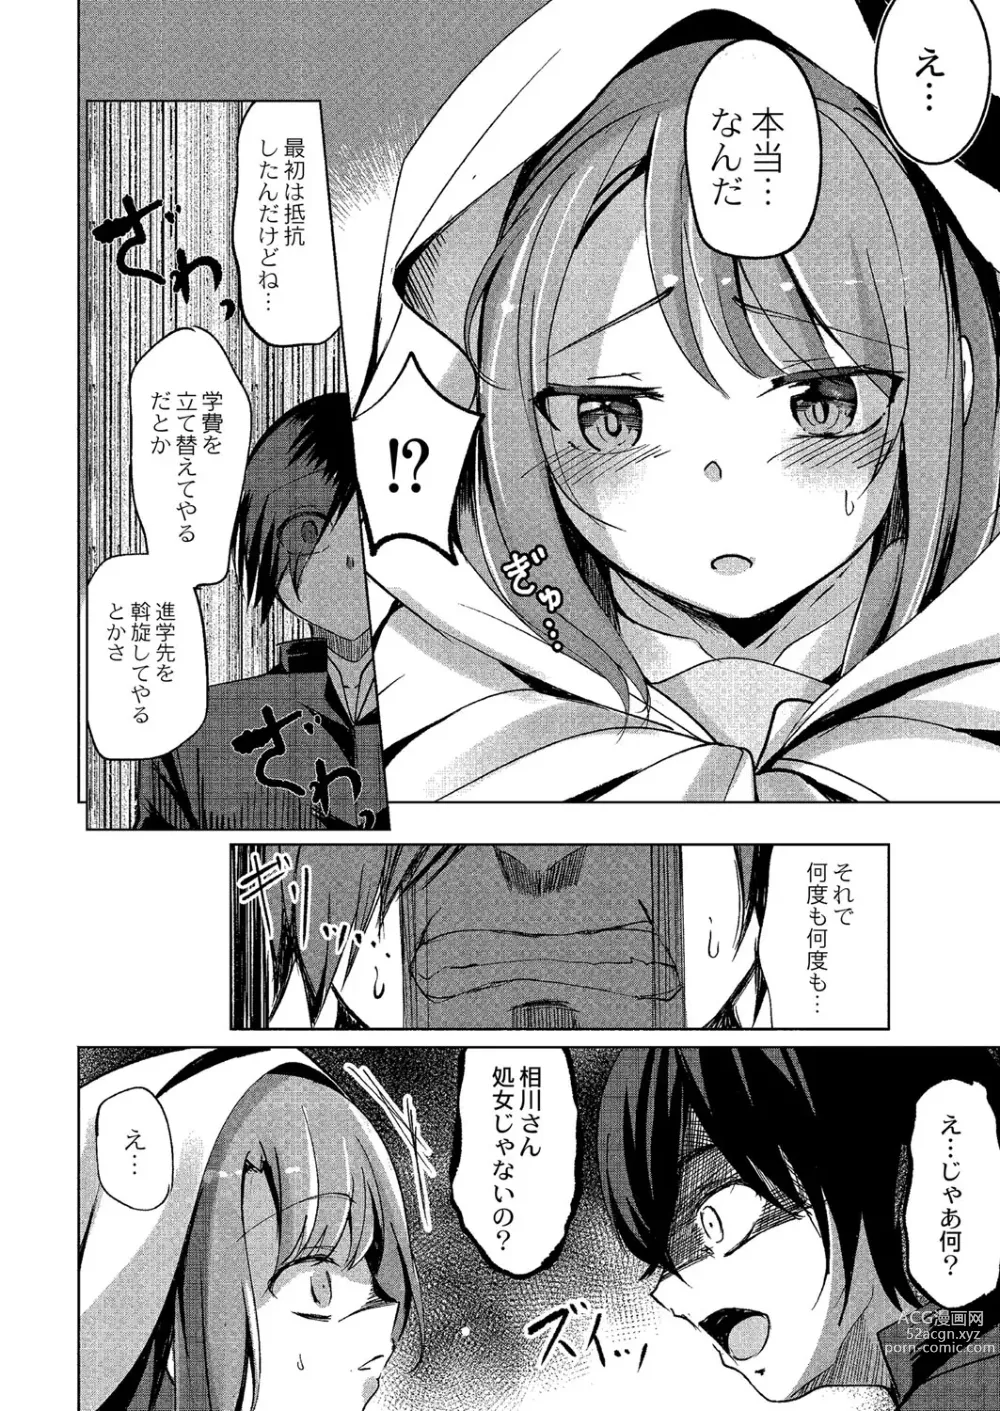 Page 9 of manga Wakarasare